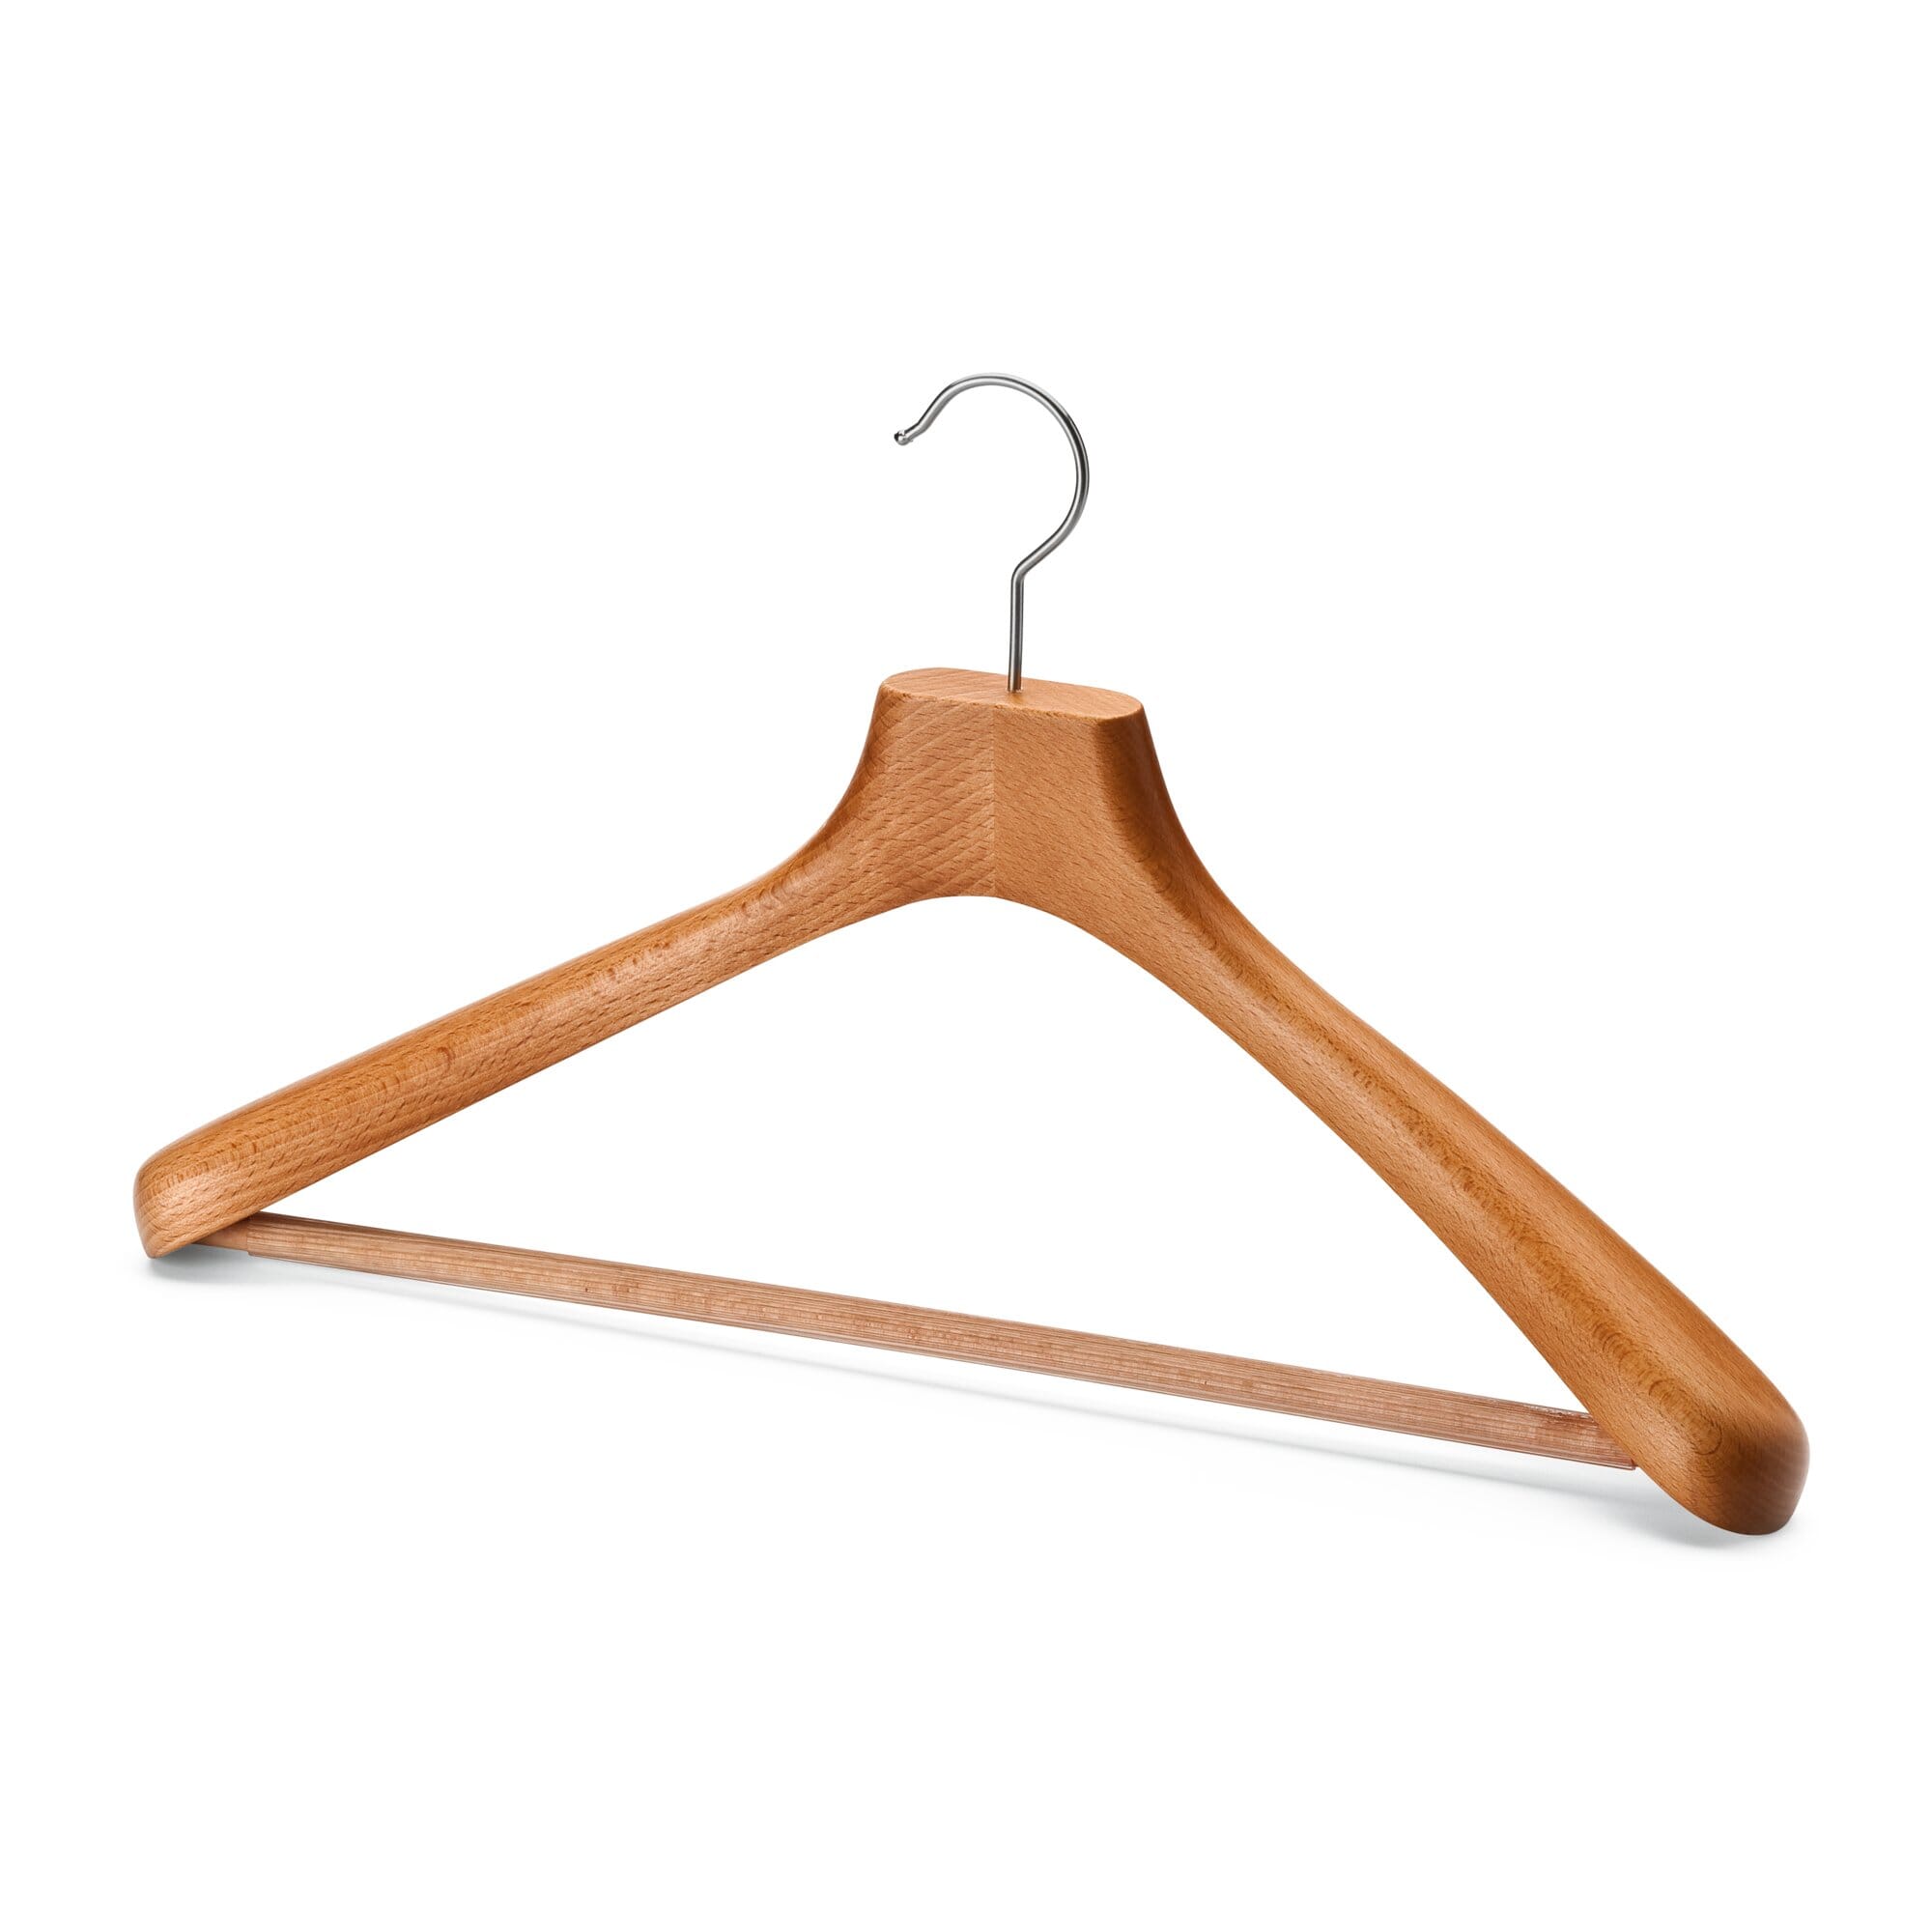 https://assets.manufactum.de/p/021/021145/21145_01.jpg/solid-shape-coat-hanger-men.jpg